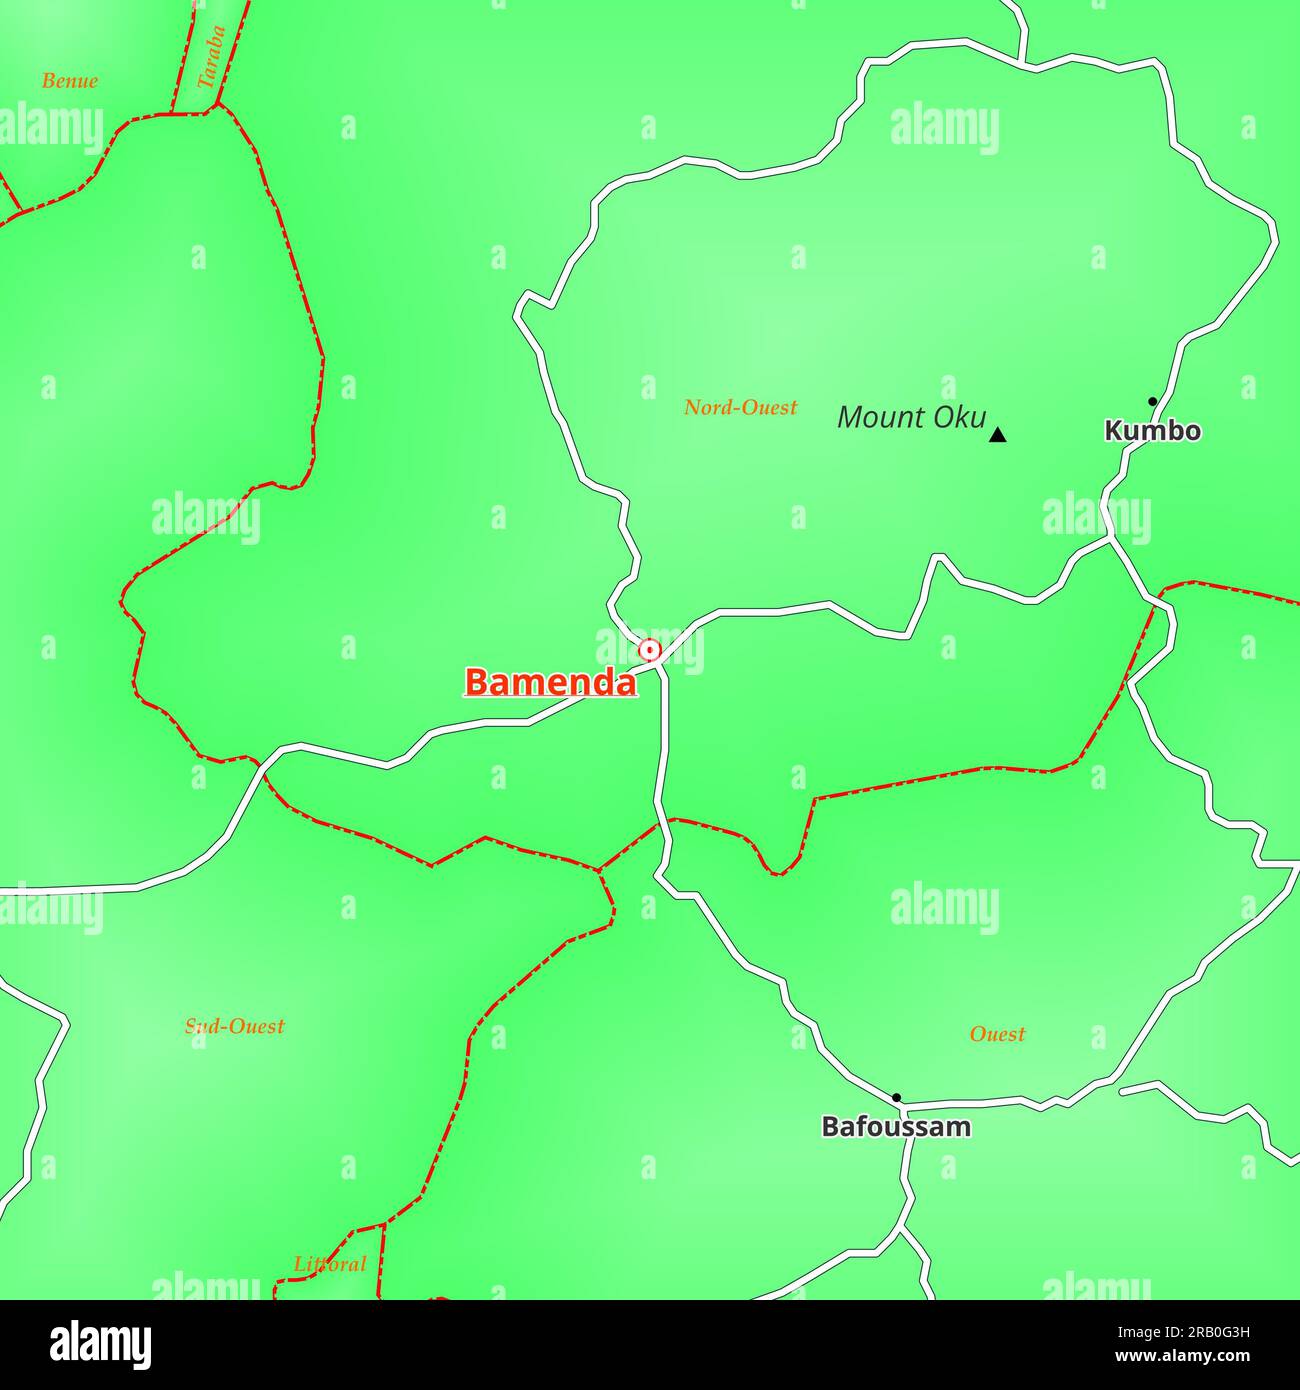 Map of Bamenda City in Cameroon Stock Photo - Alamy